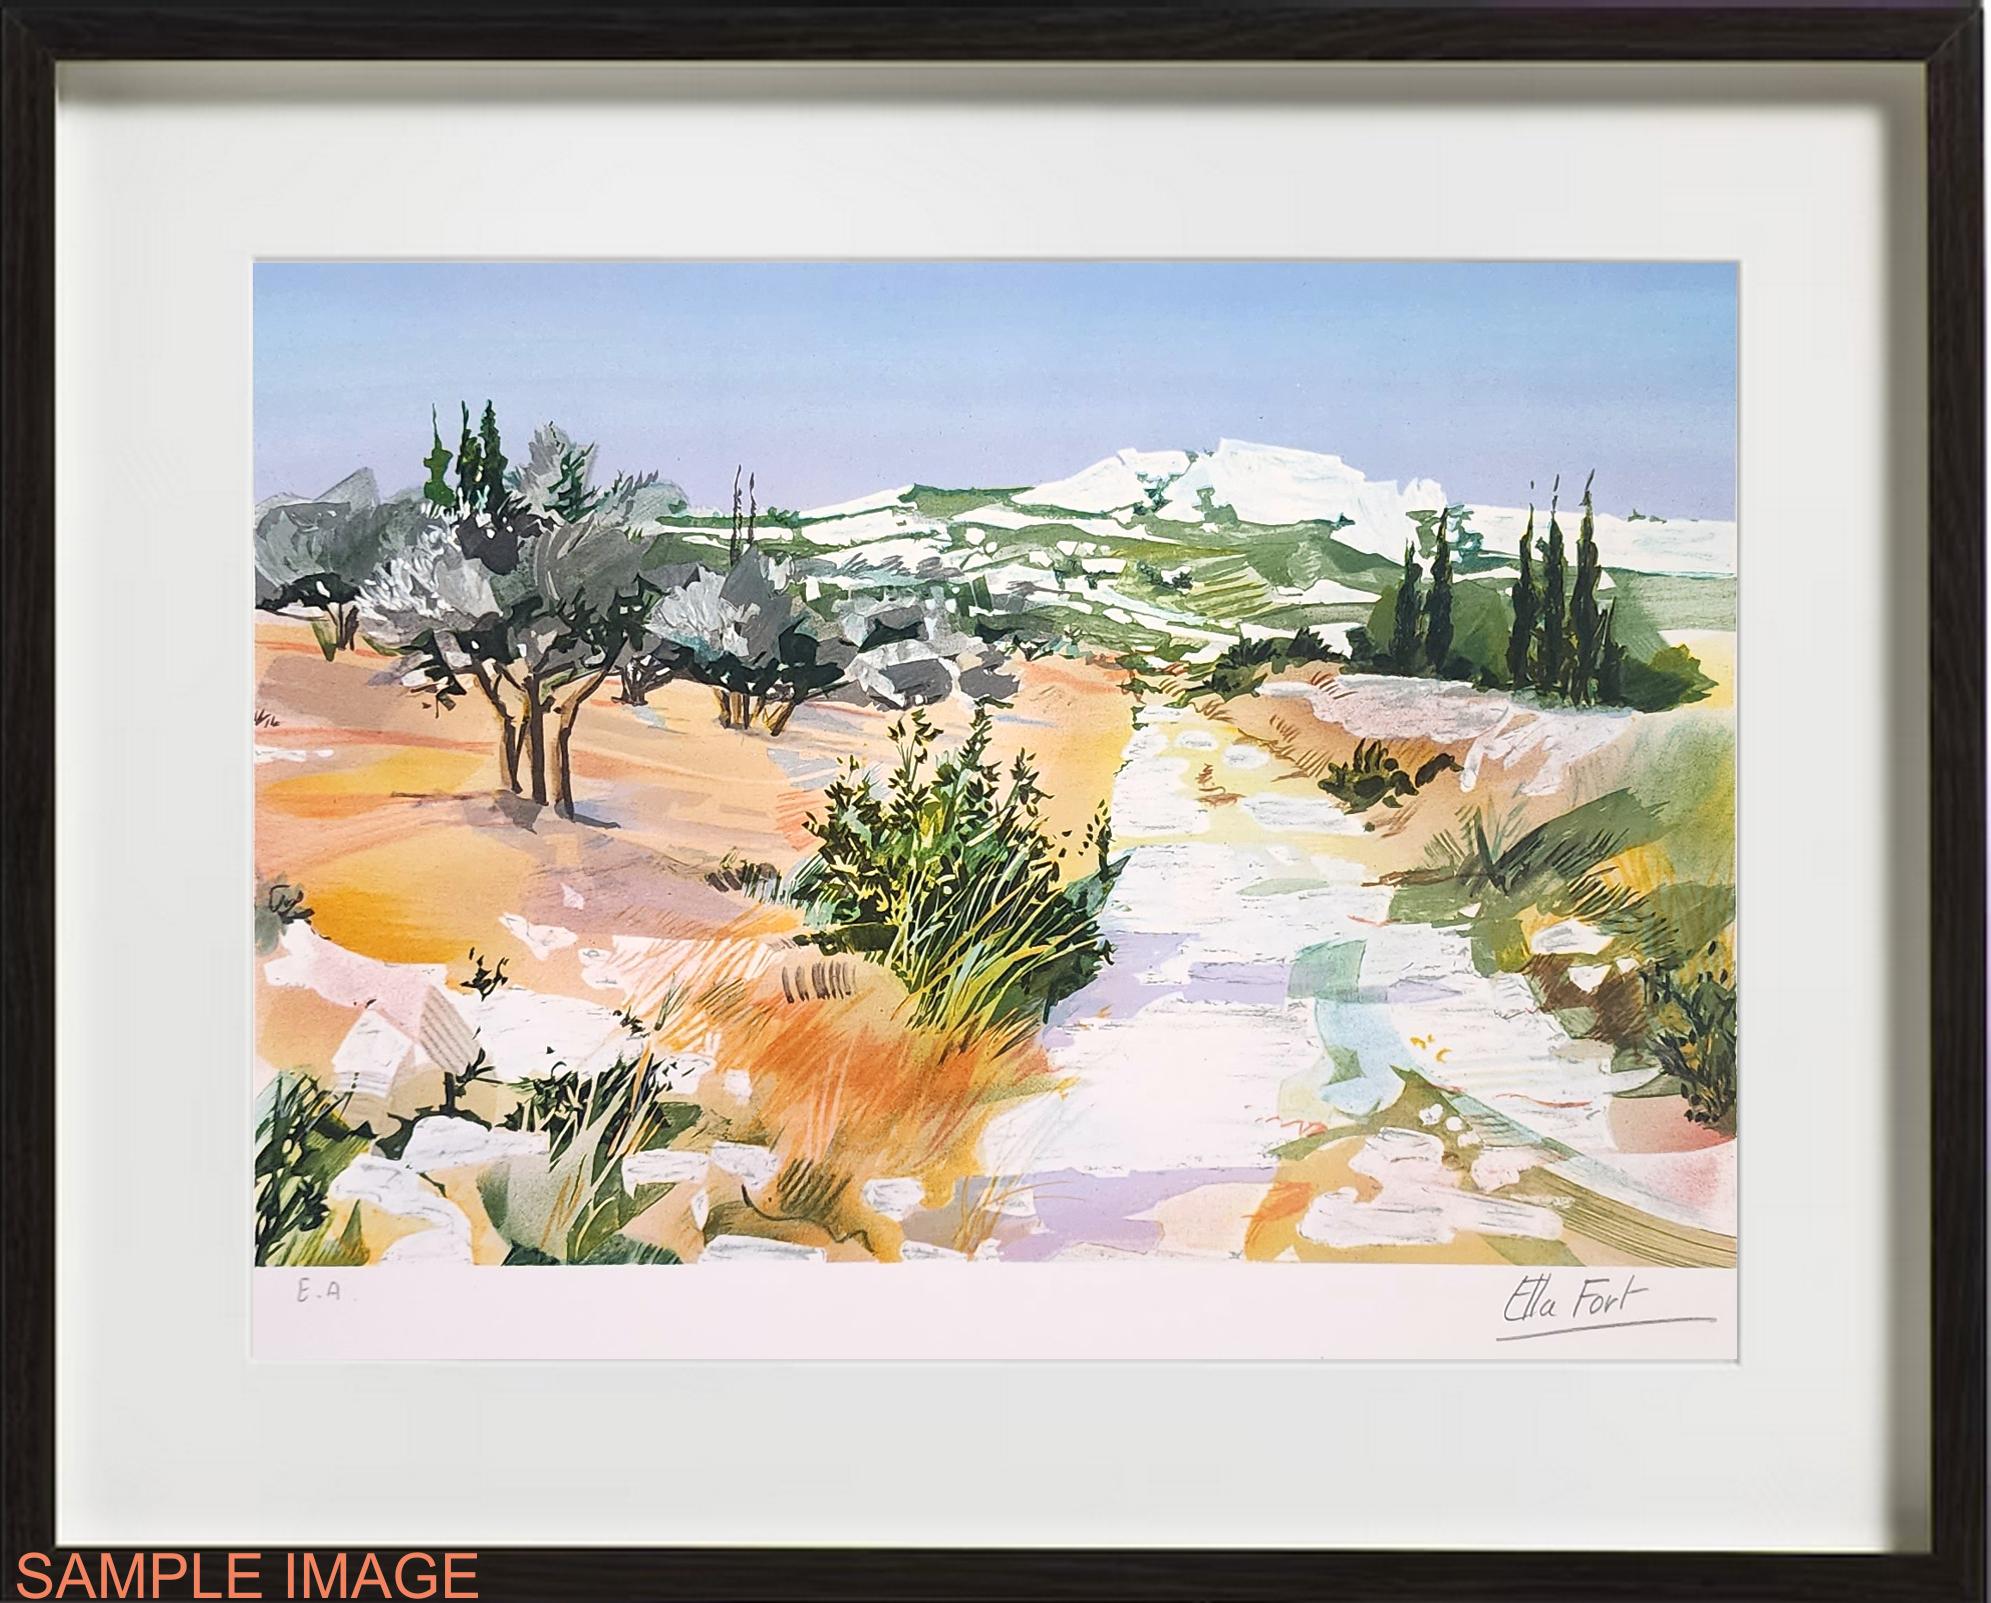 Ella Fort Landscape Print - The Lonesome Road (FRAMED + FREE US SHIPPING) (Provence, landscapes)